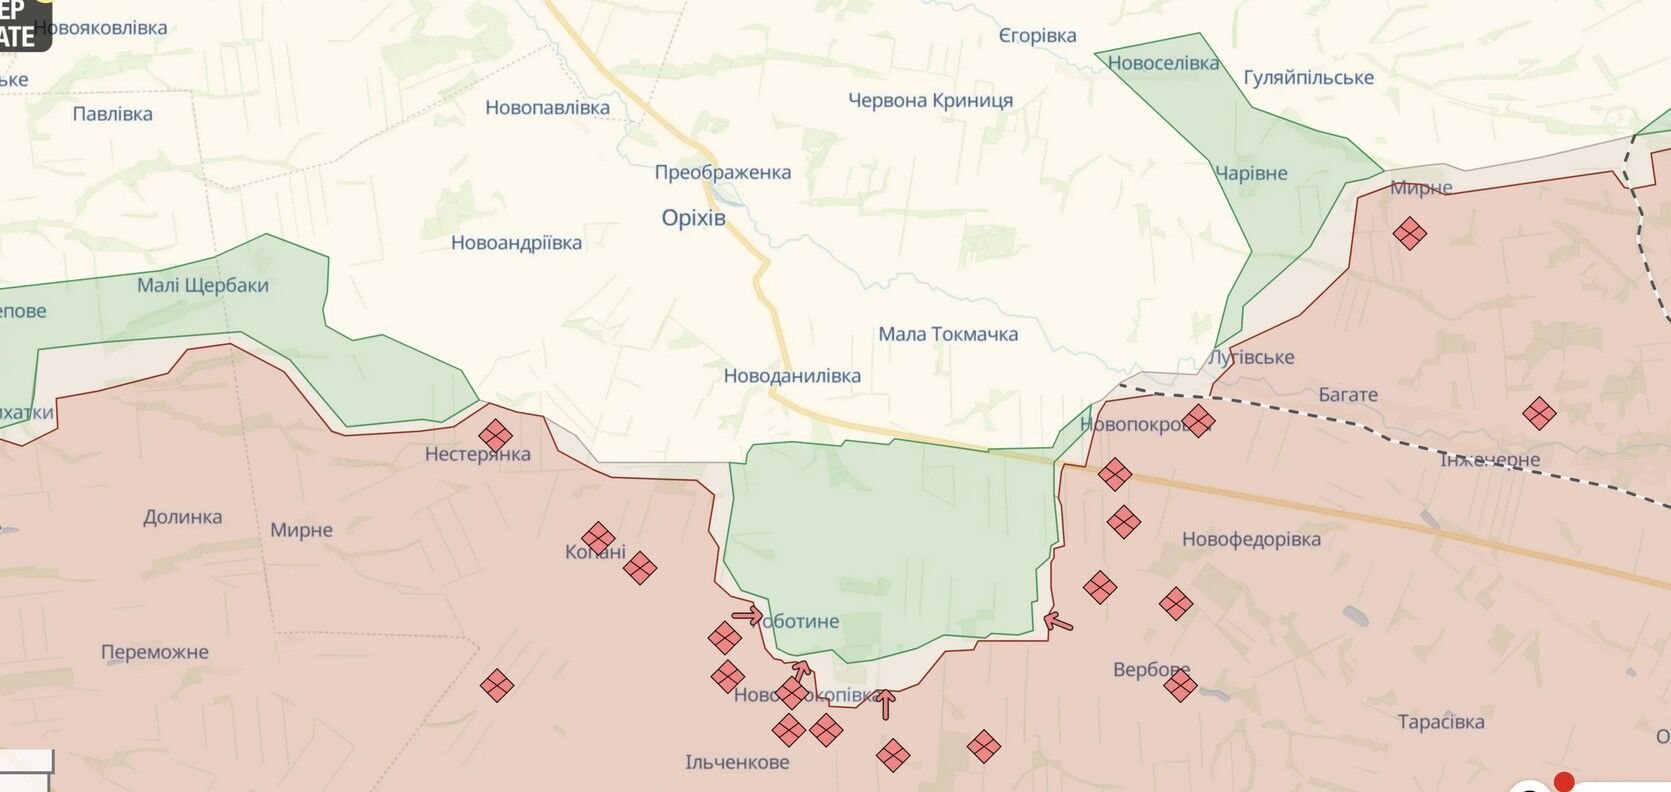 The Russians are preparing a new offensive in the Zaporizhzhia sector - Tavria Operational-Strategic Group